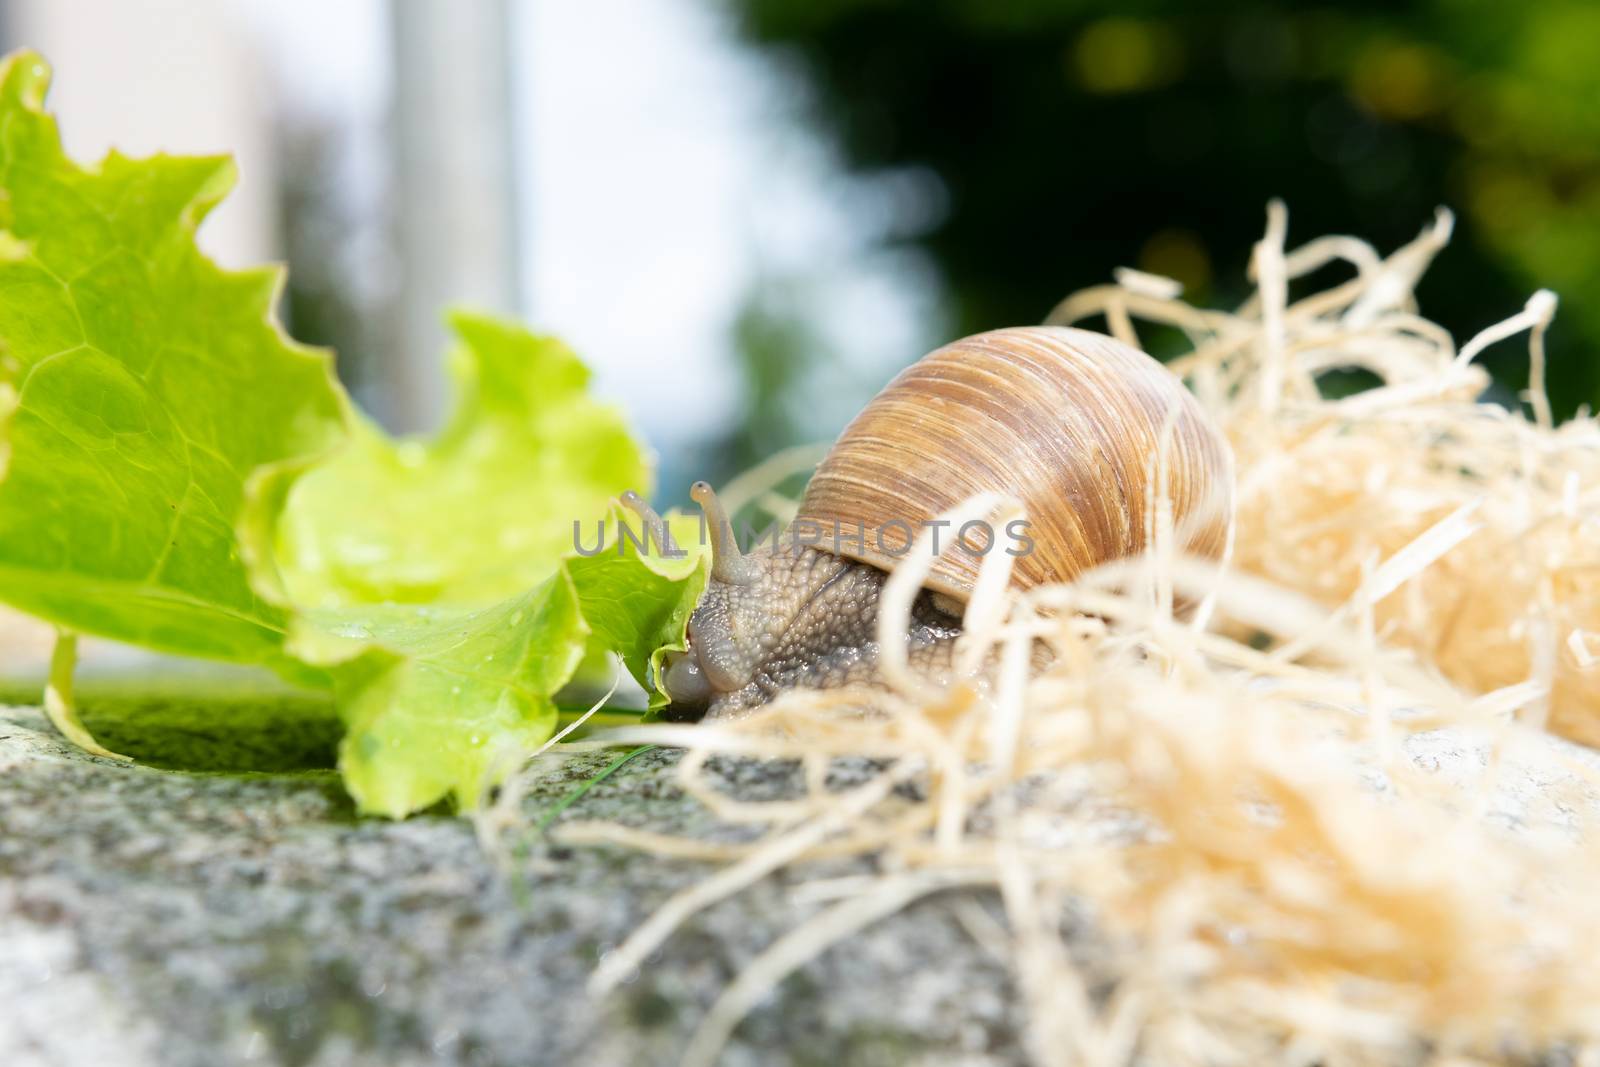 Burgundy snail on a stone eating a salad leaf